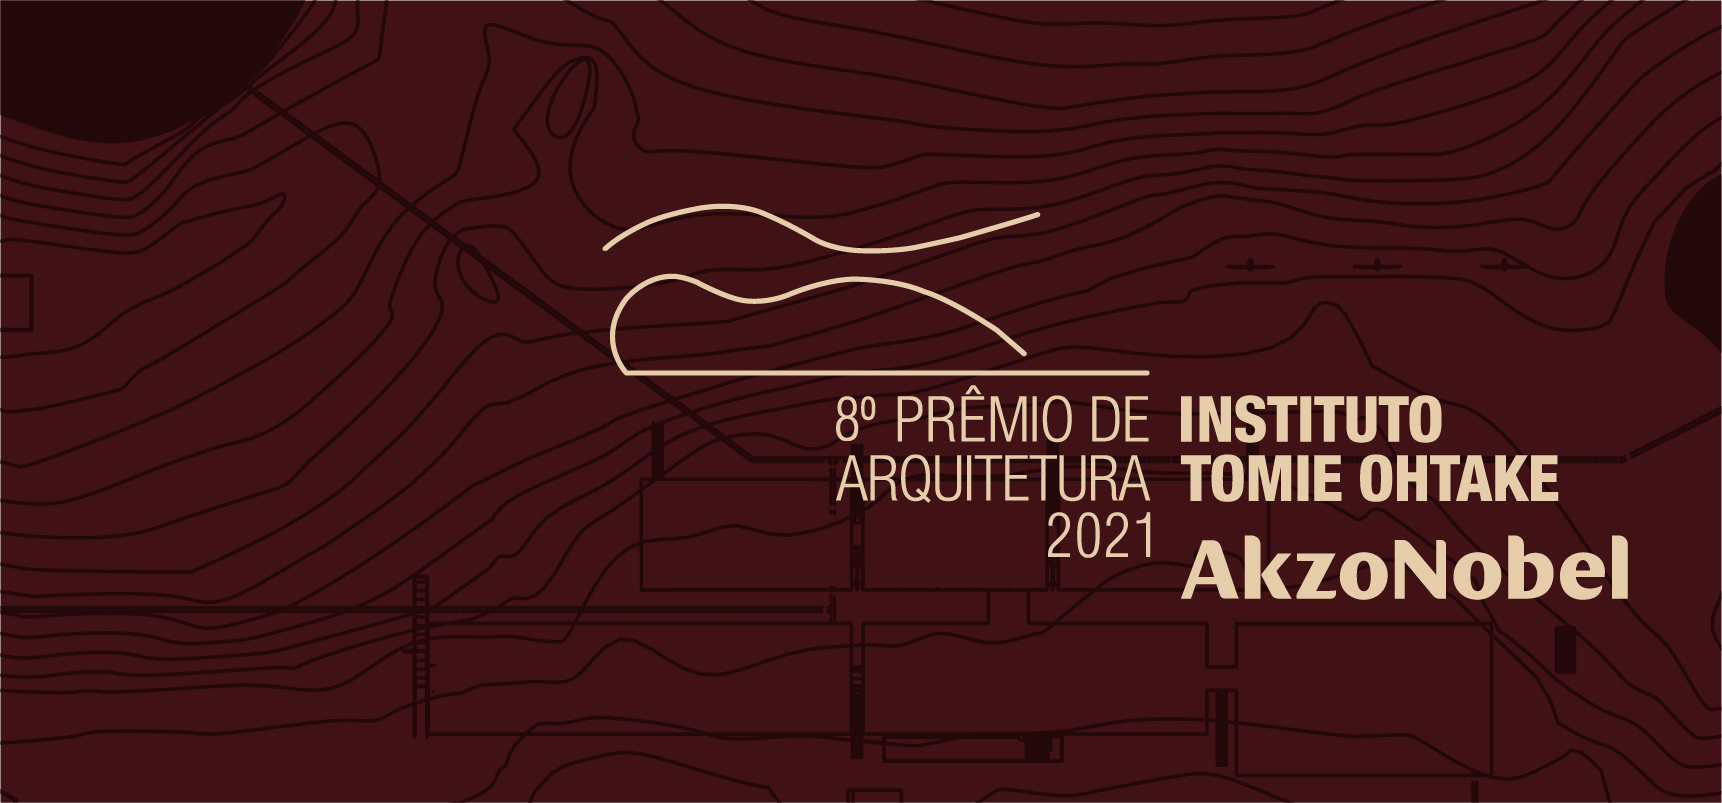 8.° Prêmio de Arquitetura Instituto Tomie Ohtake AkzoNobel